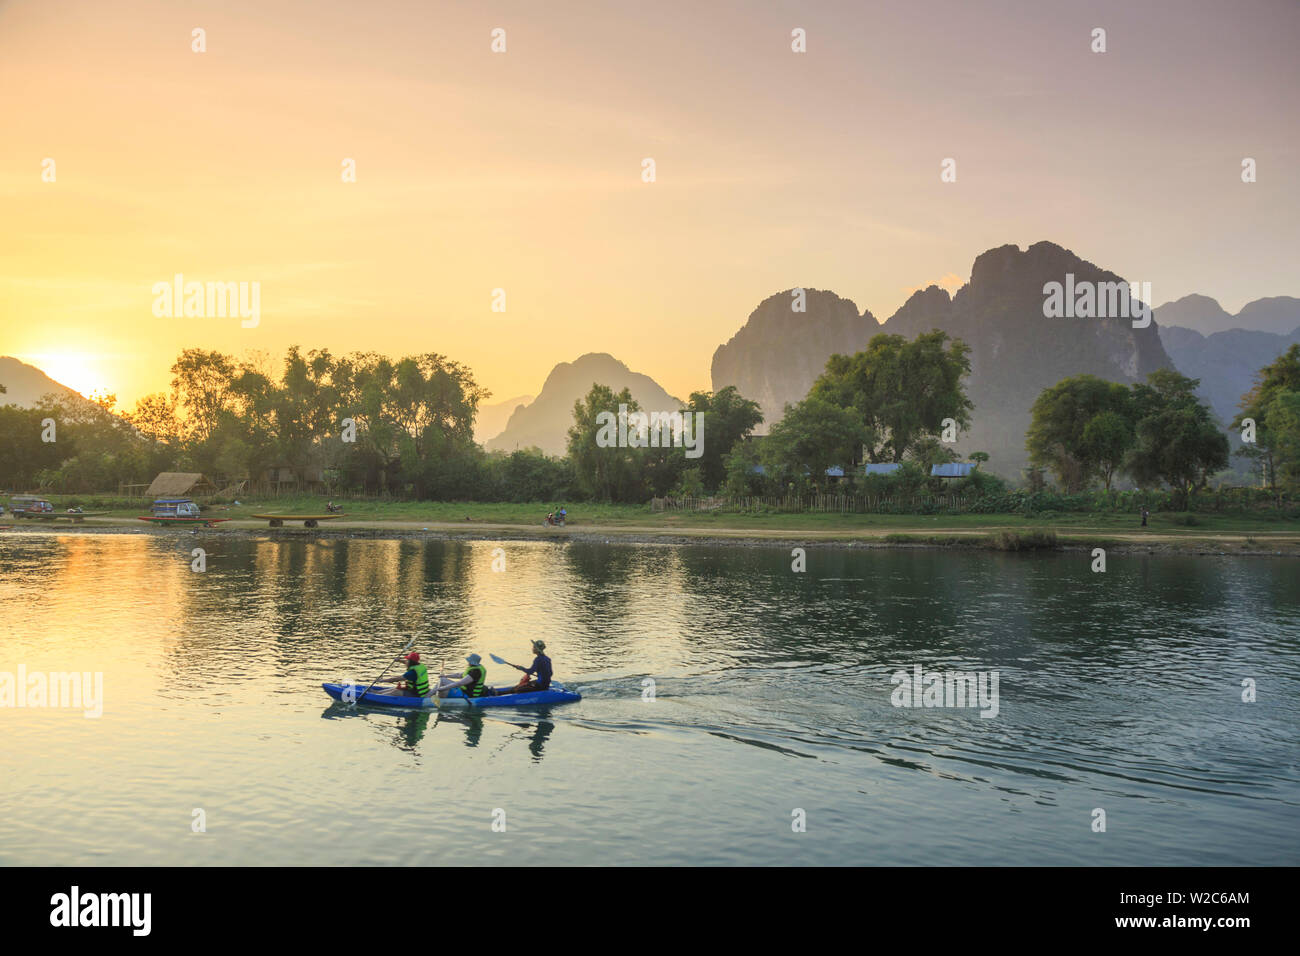 Laos, Vang Vieng. Nam Song River e il paesaggio carsico Foto Stock